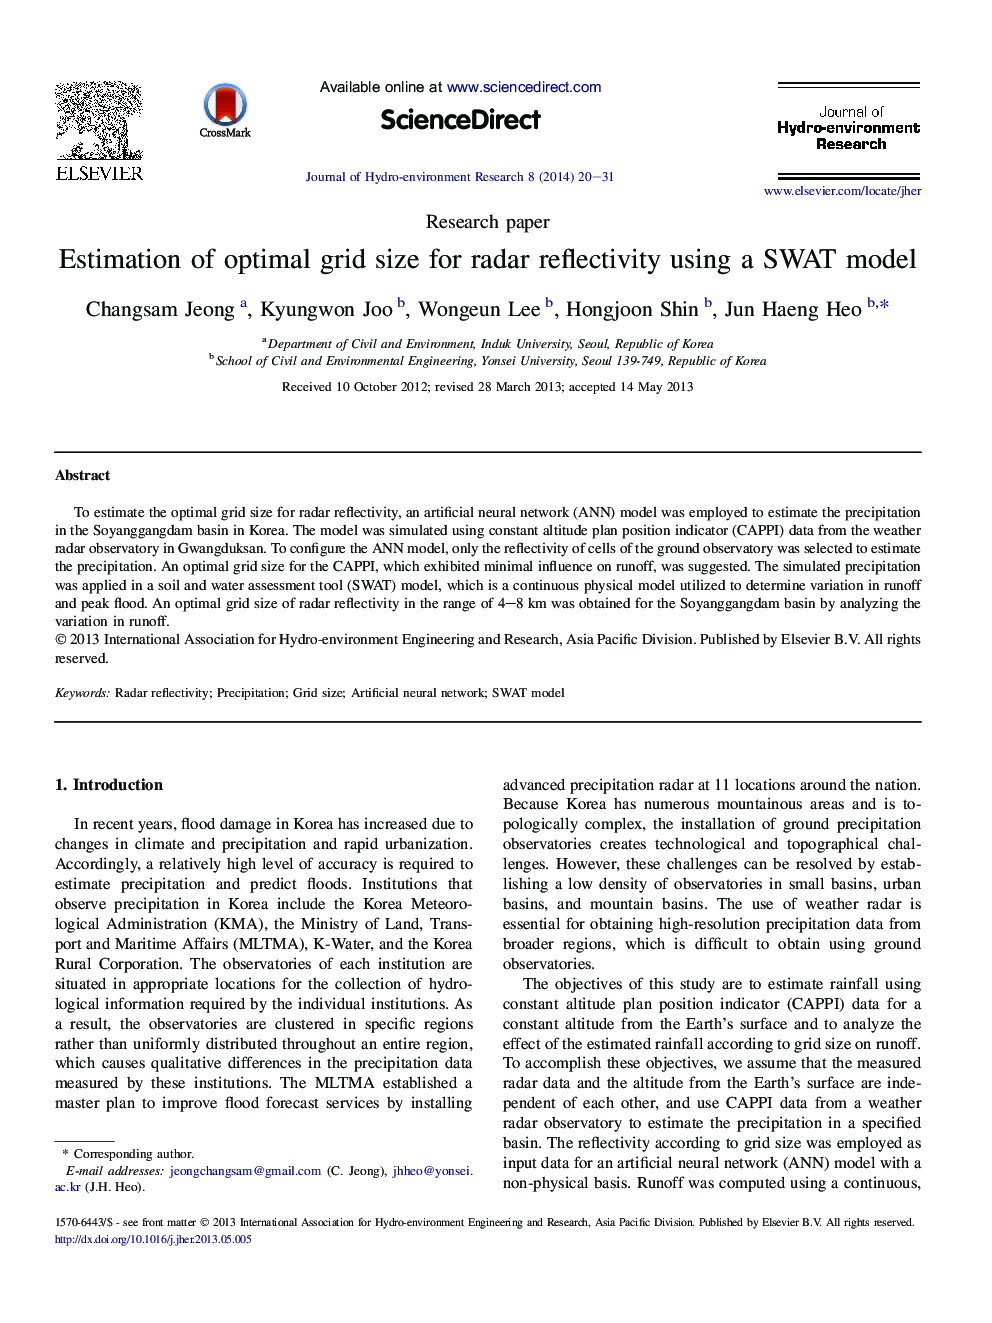 Estimation of optimal grid size for radar reflectivity using a SWAT model